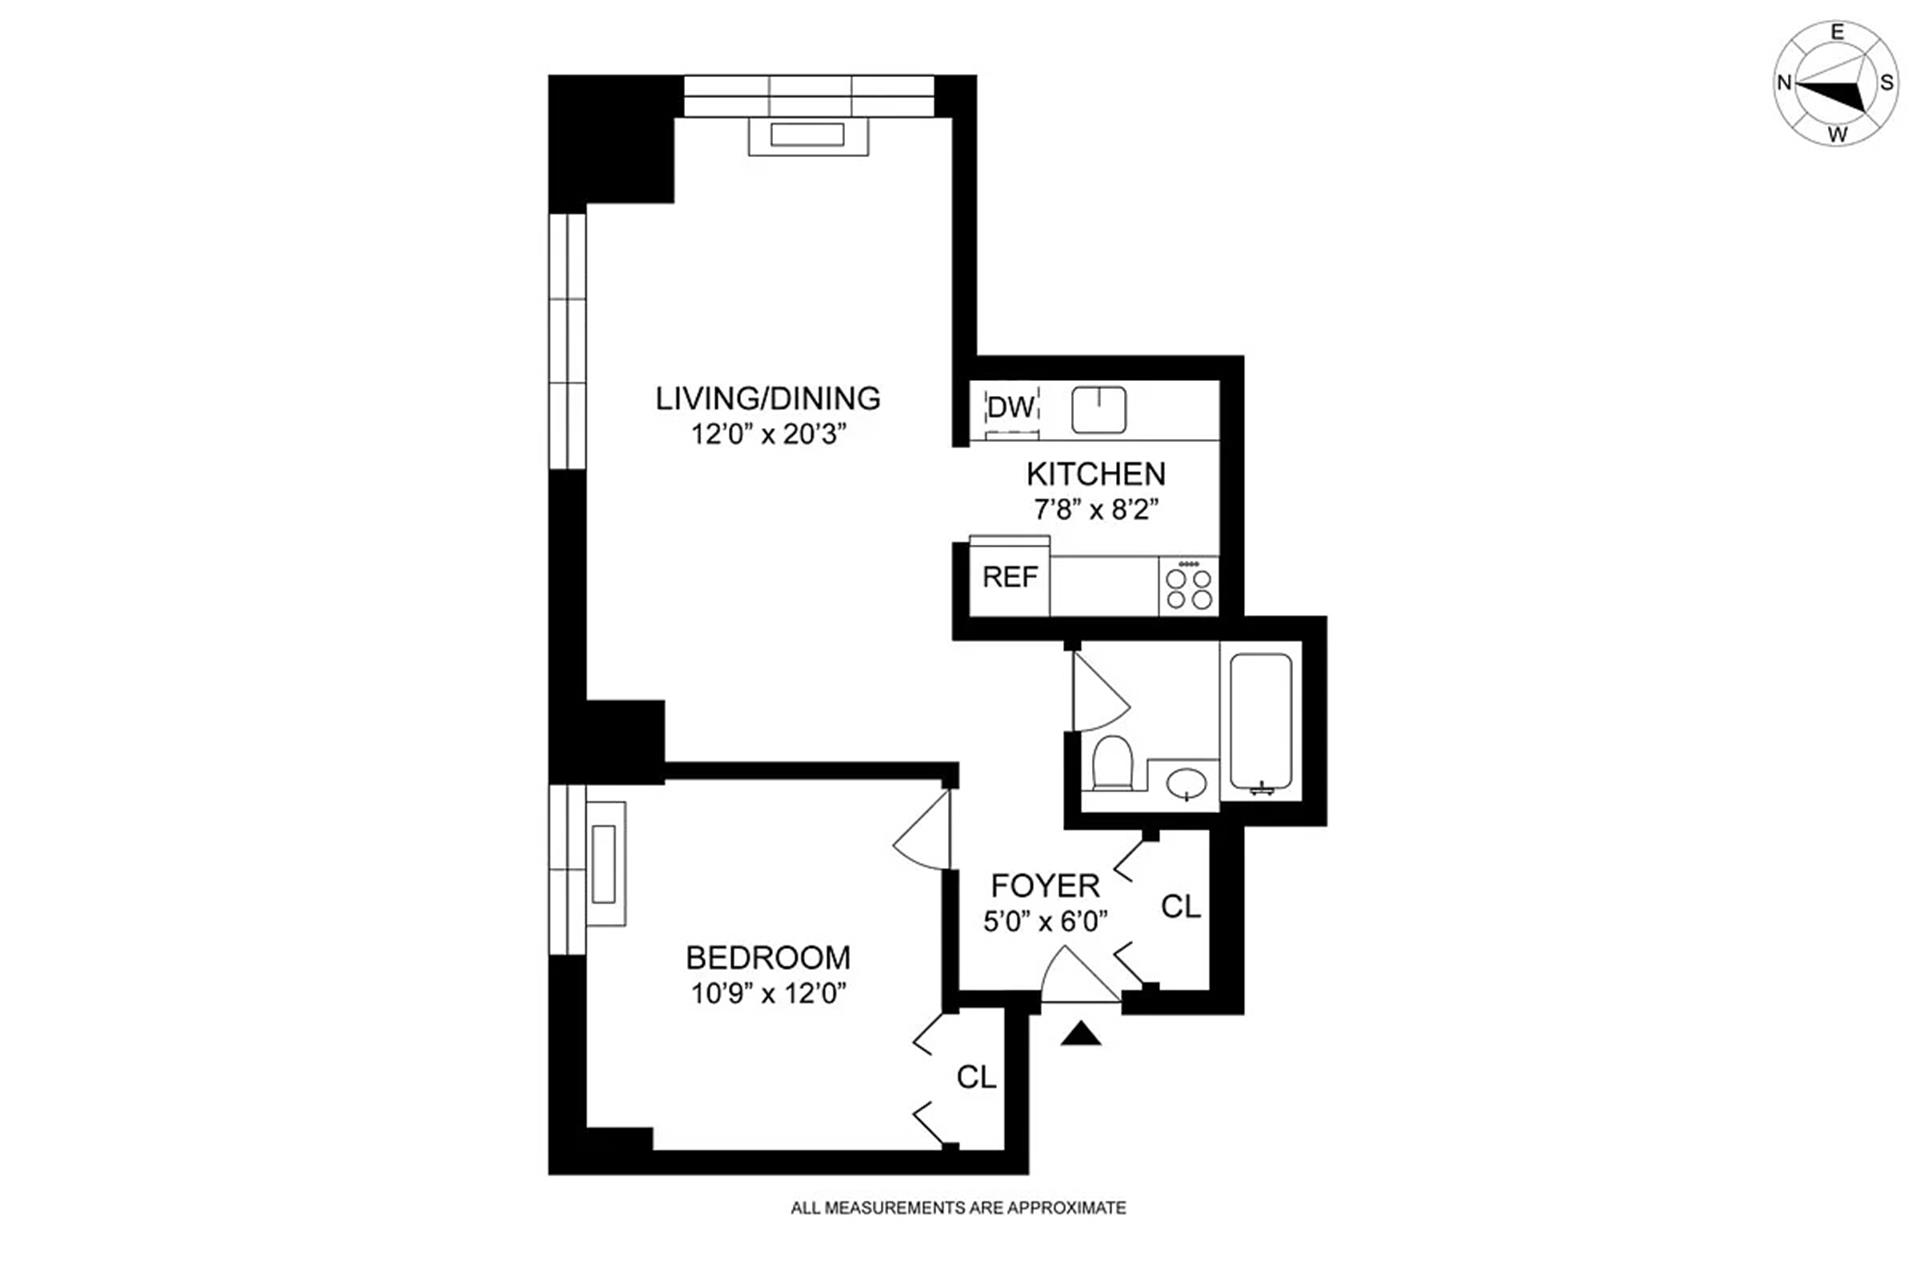 Floorplan for 199 Bowery, 8B